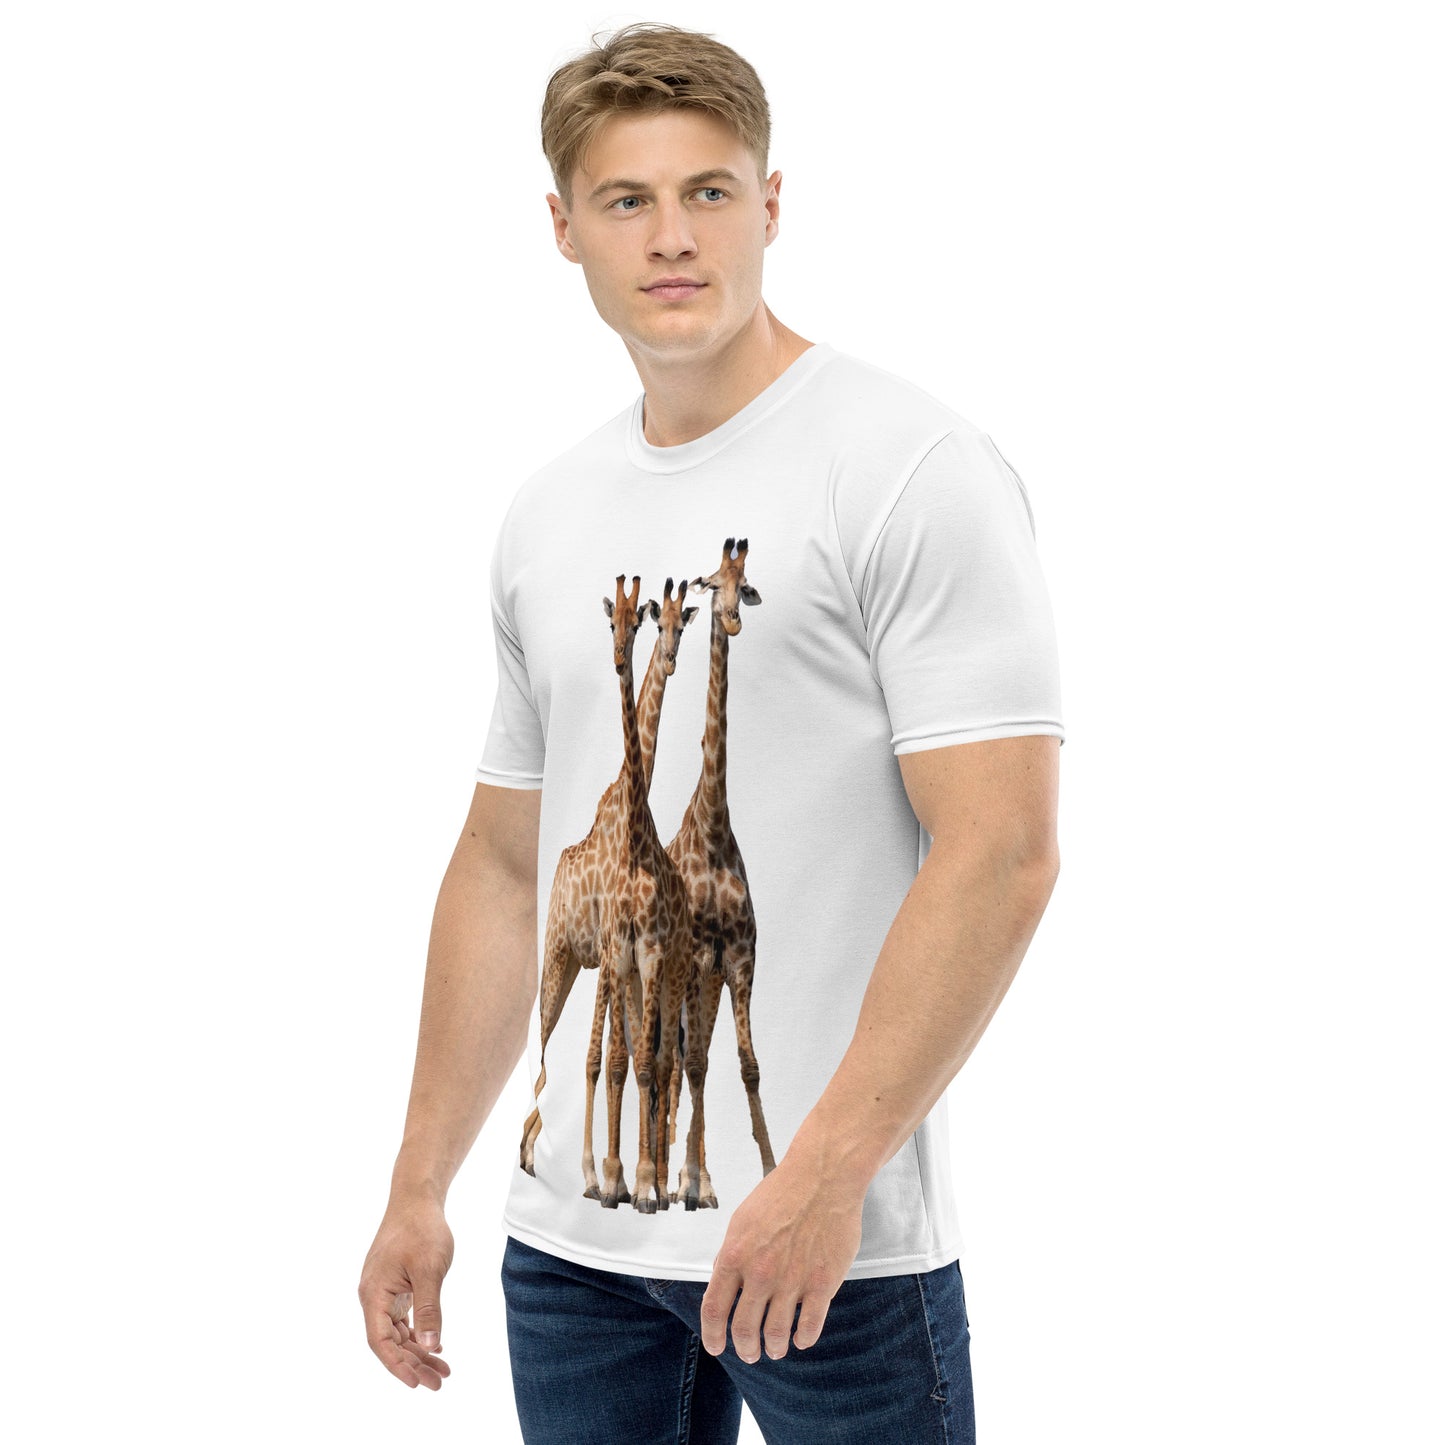 Mens T-shirt printed with 3 giraffes